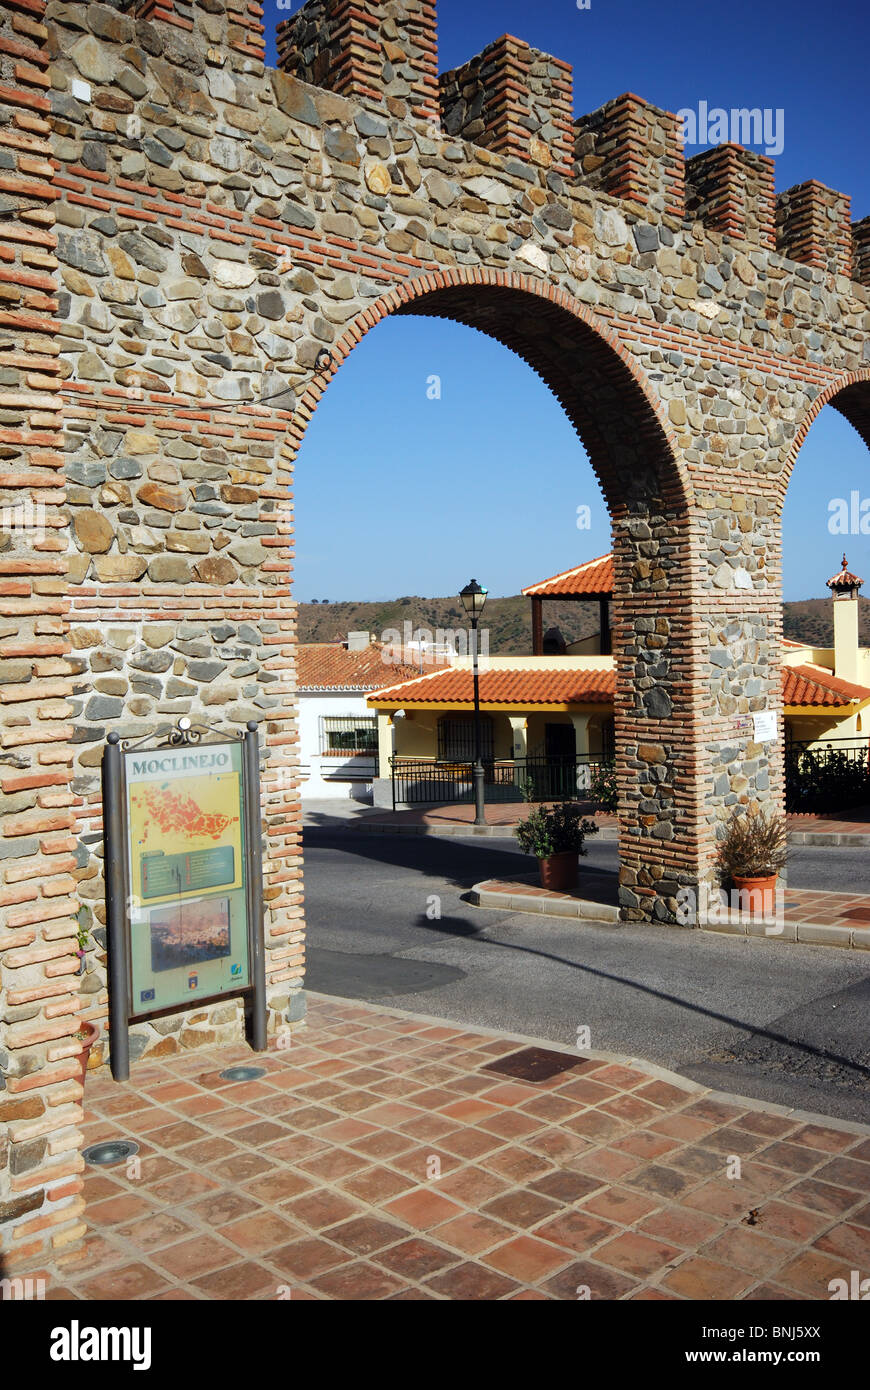 Castle style entrance arch, Whitewashed village (pueblo blanco), Moclinejo, Costa del Sol, Malaga Province, Andalucia, Spain. Stock Photo